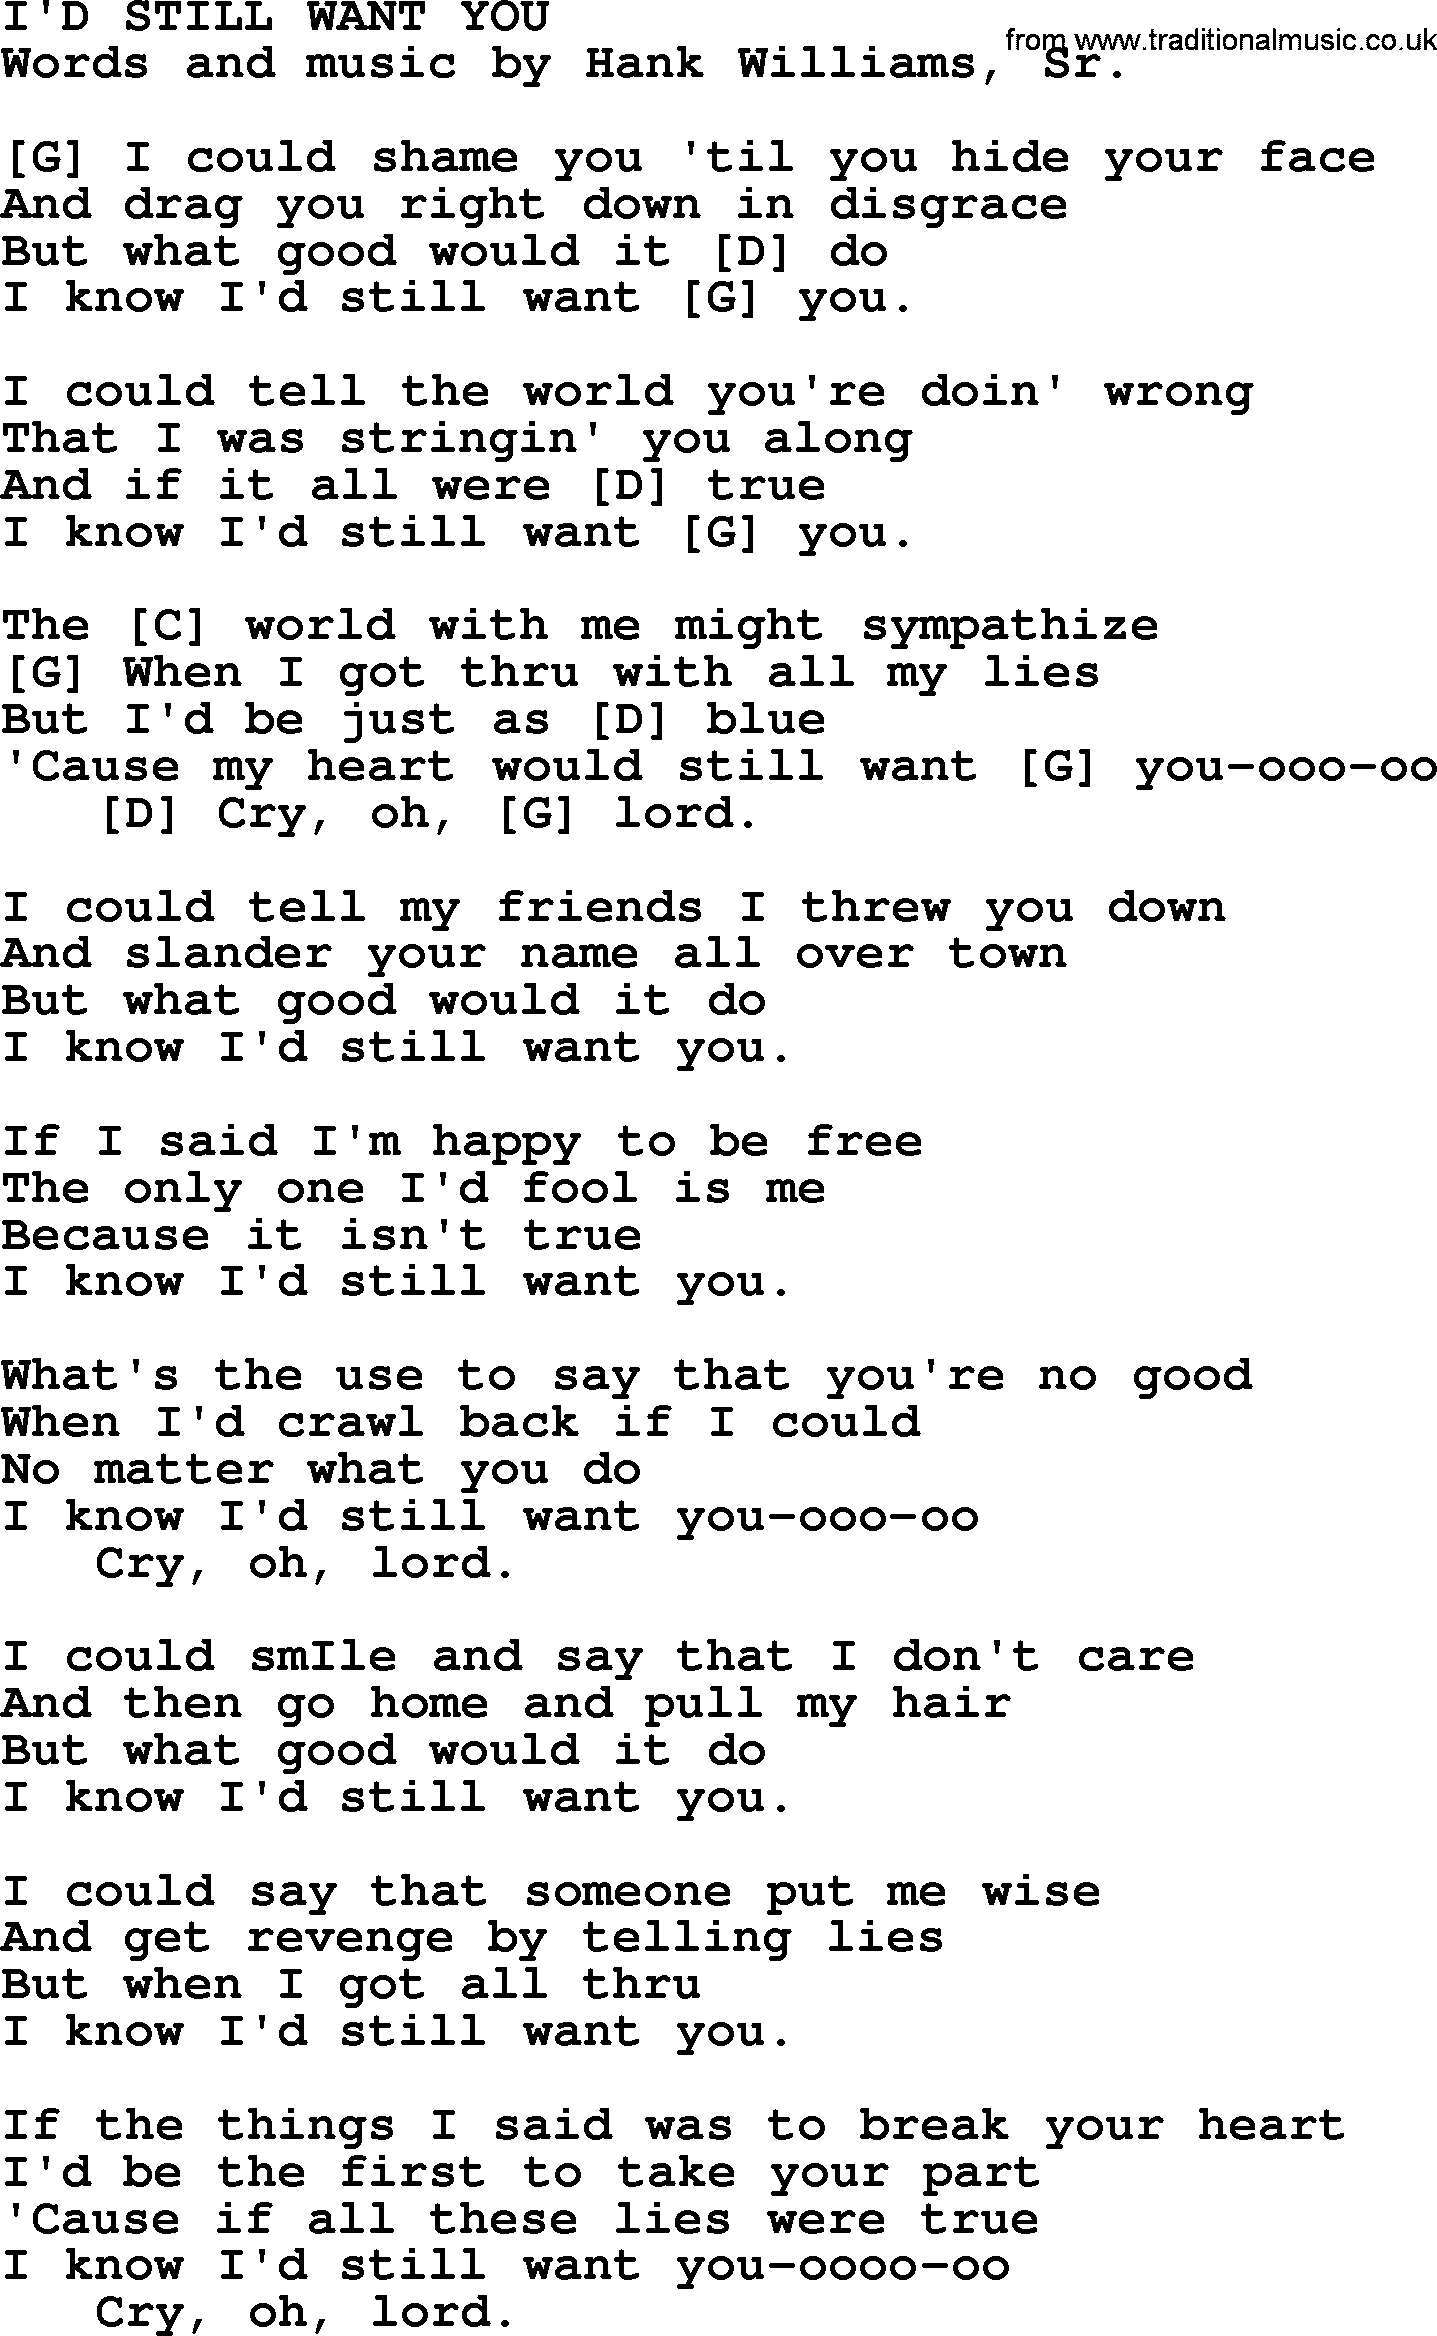 Hank Williams song I'd Still Want You, lyrics and chords